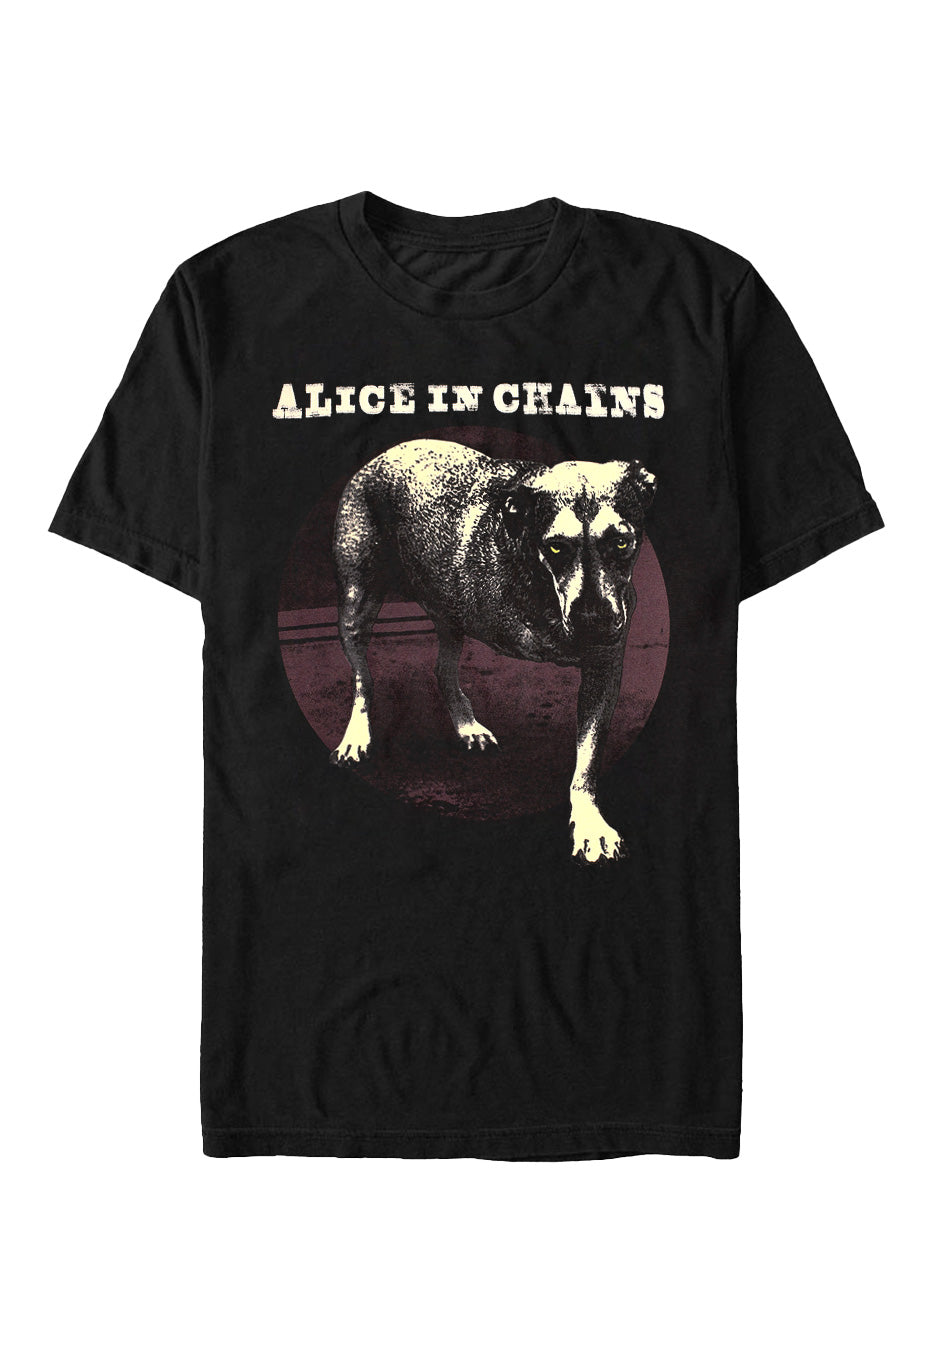 Alice In Chains - Three Legged Dog - T-Shirt